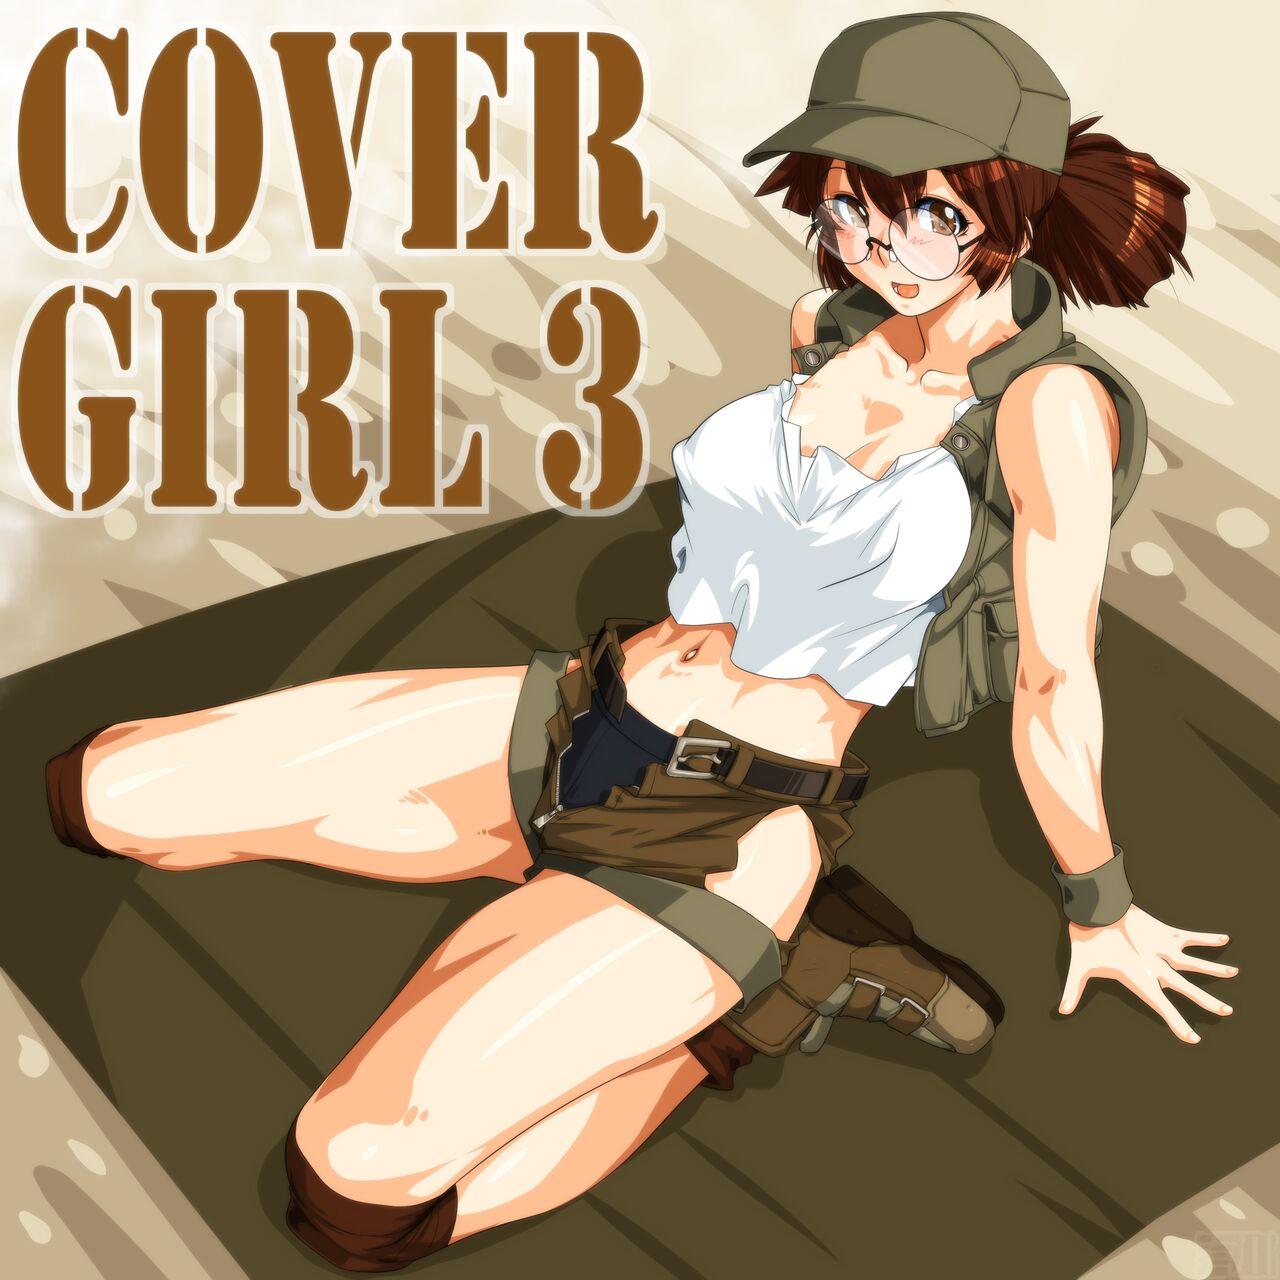 COVER GIRL 3 10